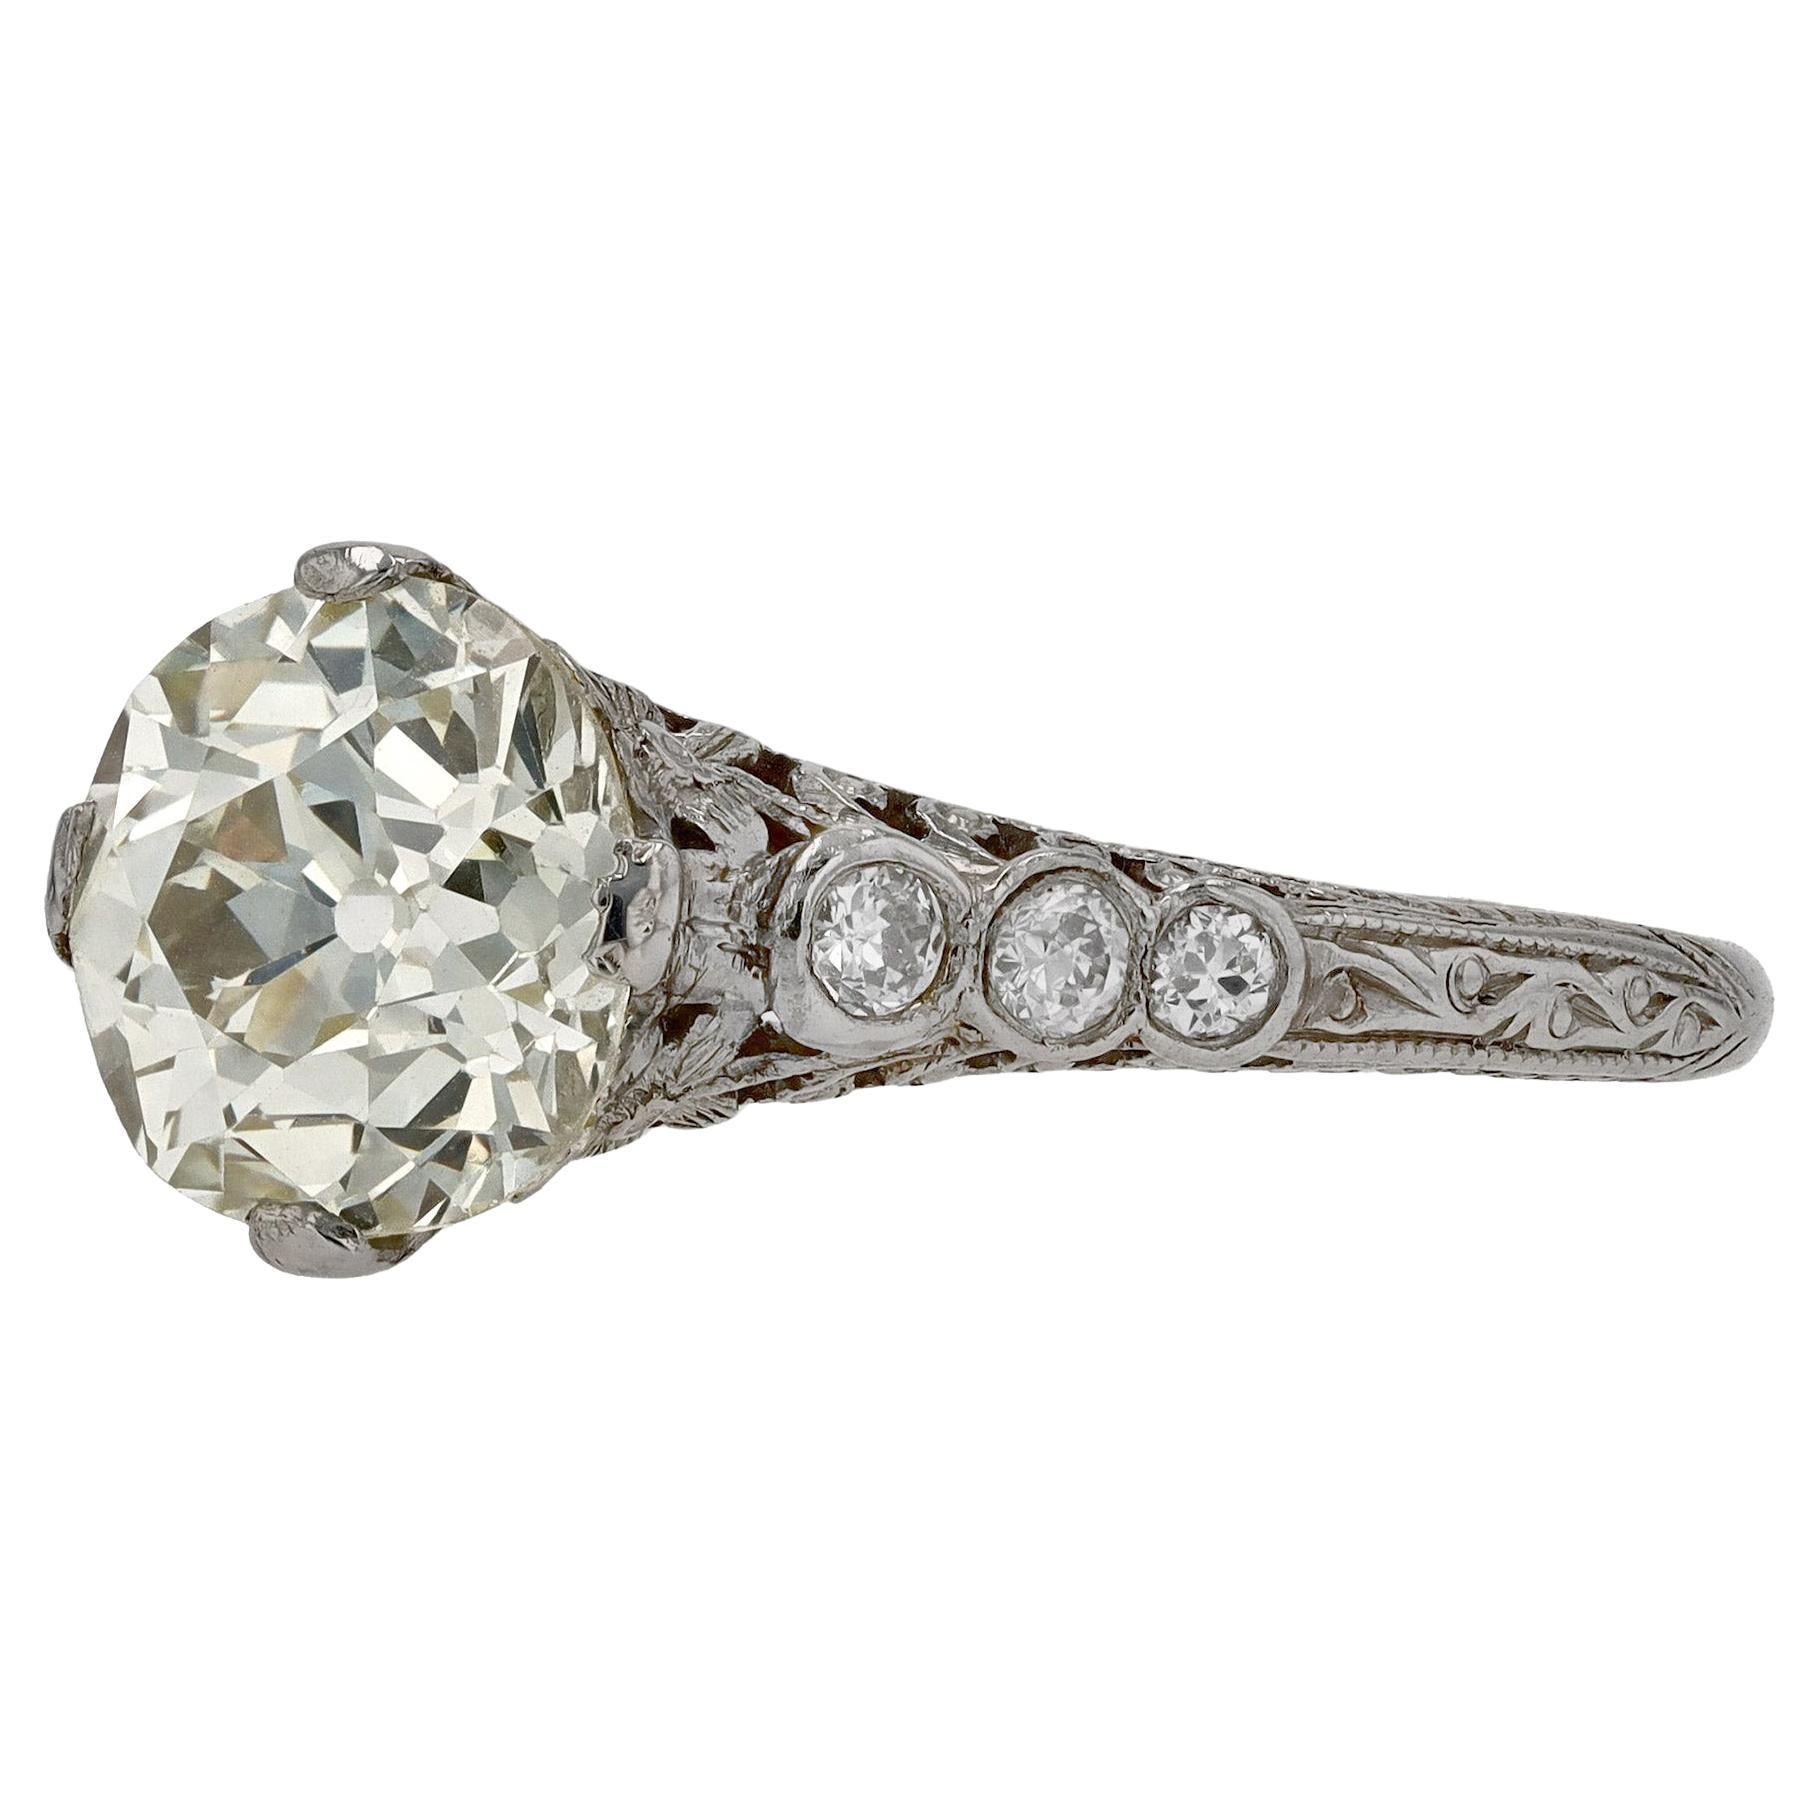 Authentic Art Deco 1920s 2.27 Carat Diamond Engagement Ring